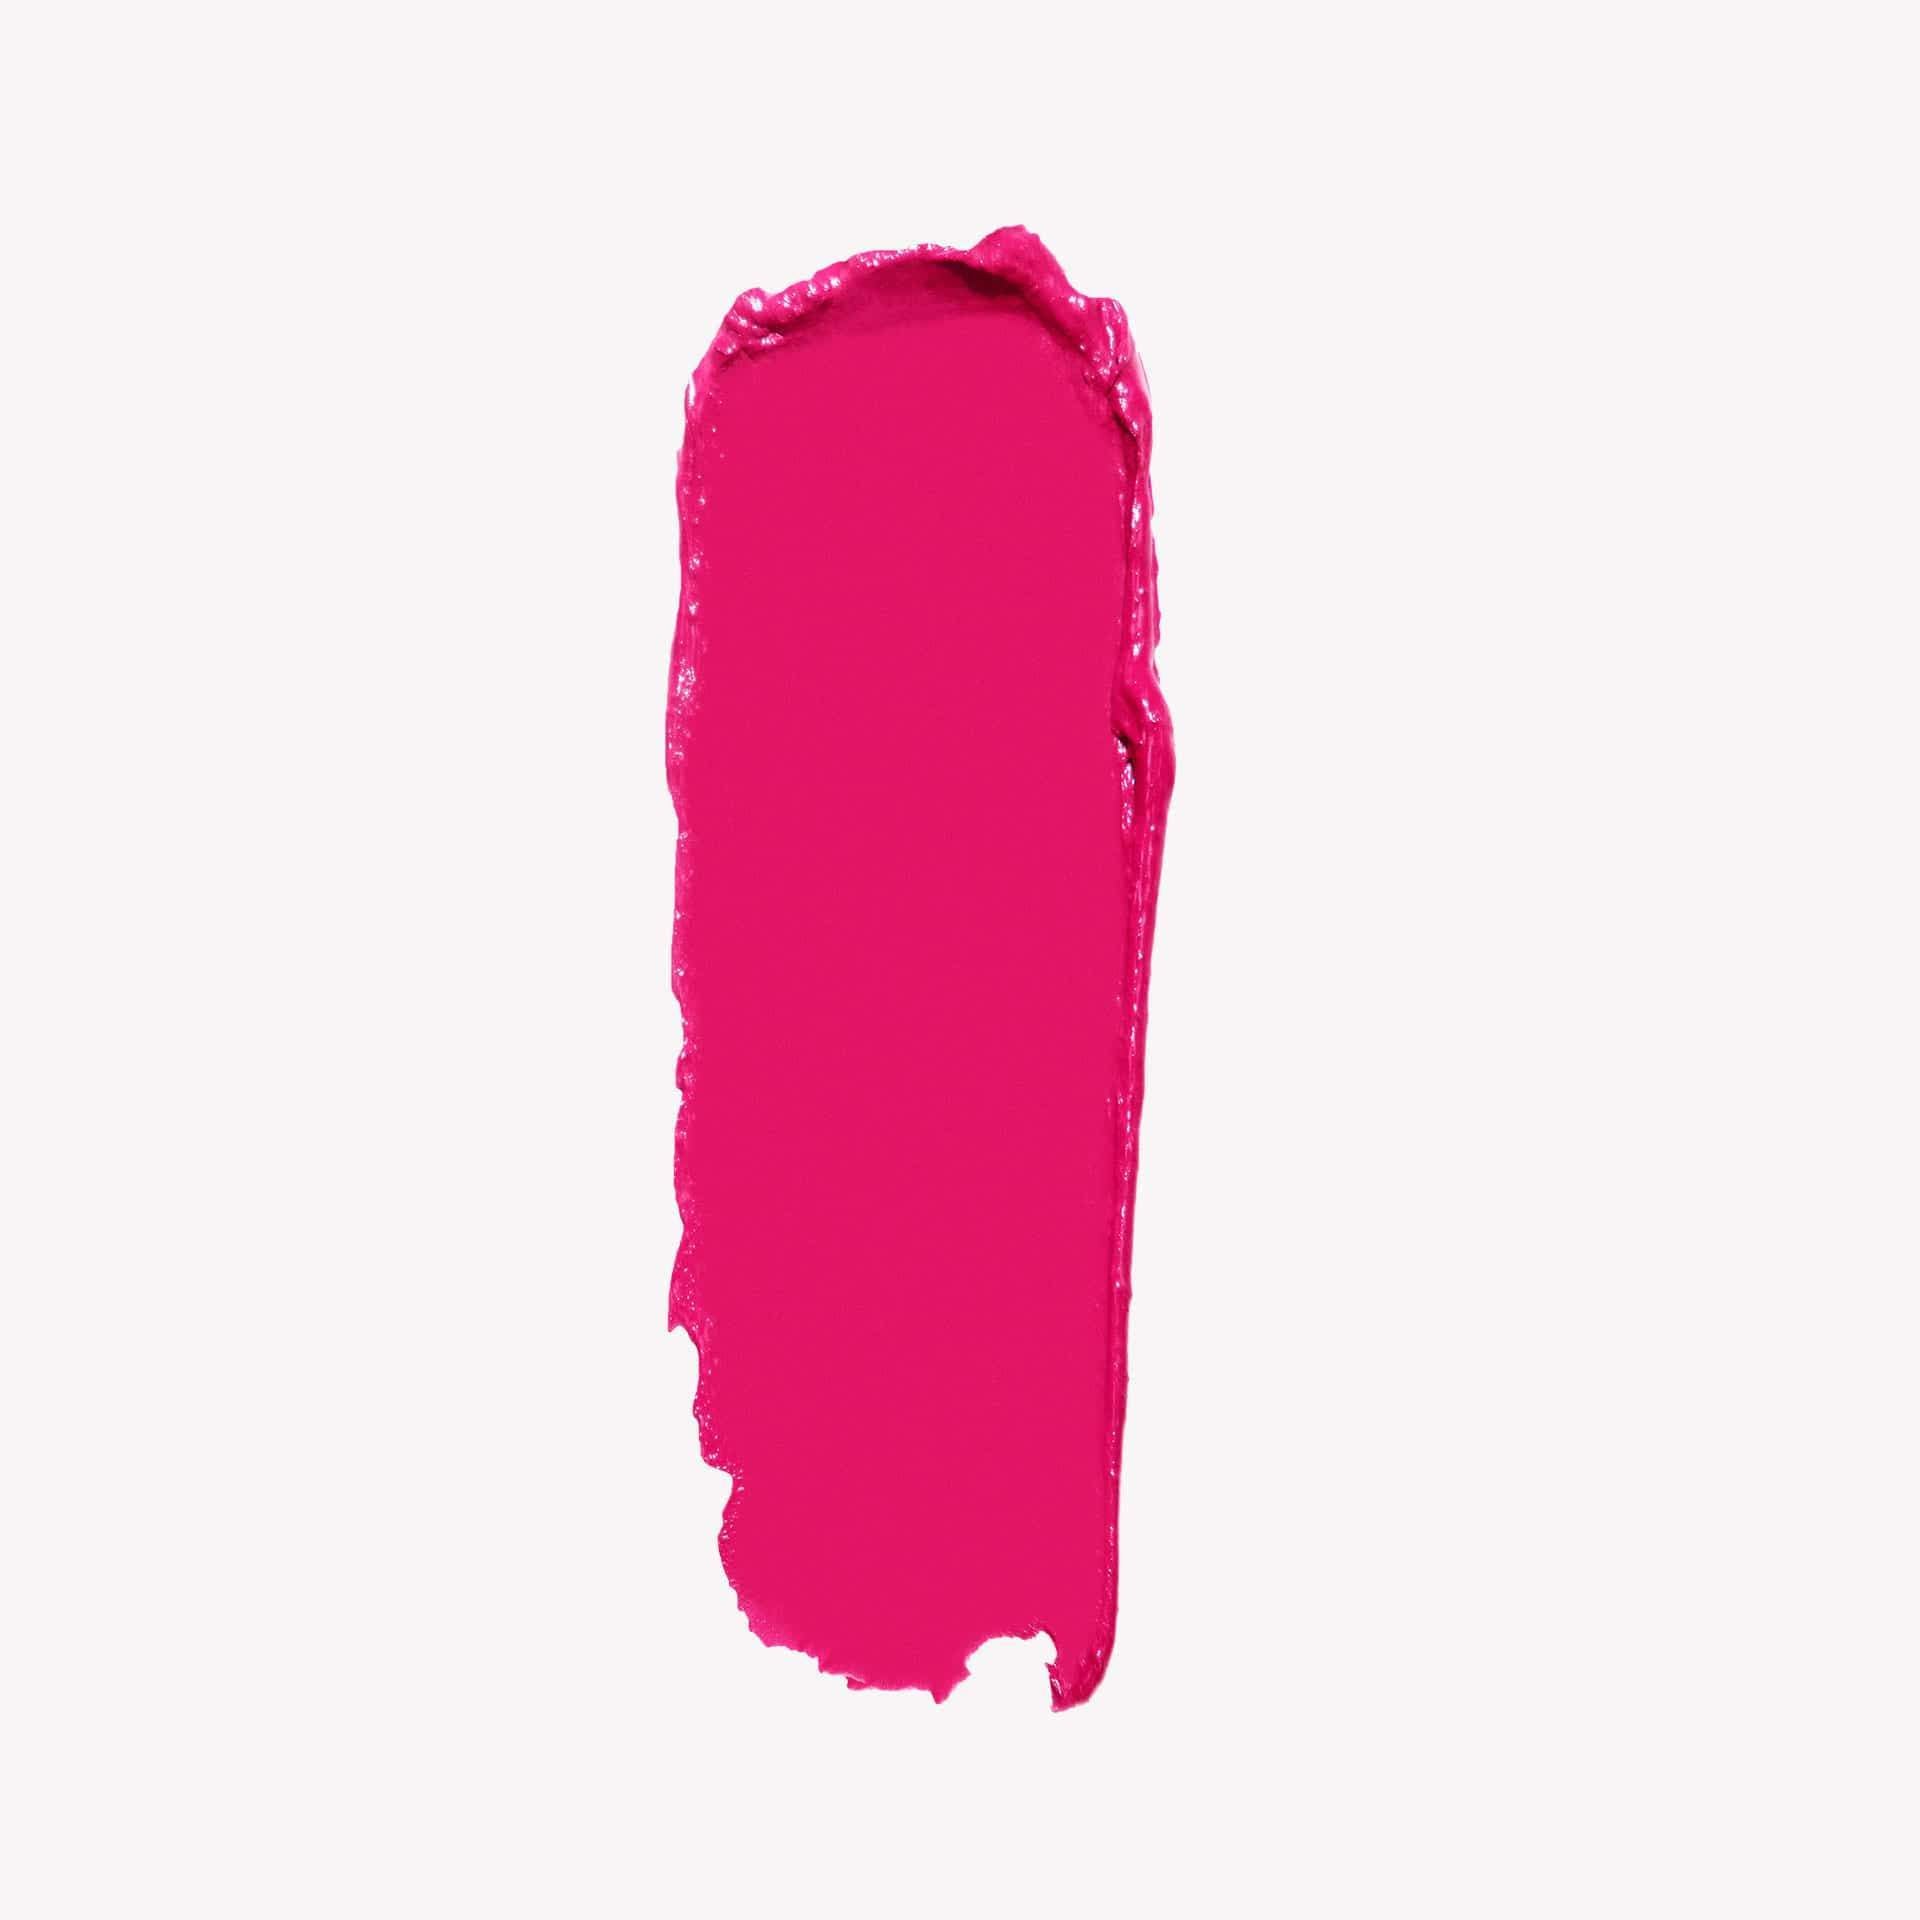 Dose Of Color Liquid Matte Lipstick-Pinky Promise-Meharshop